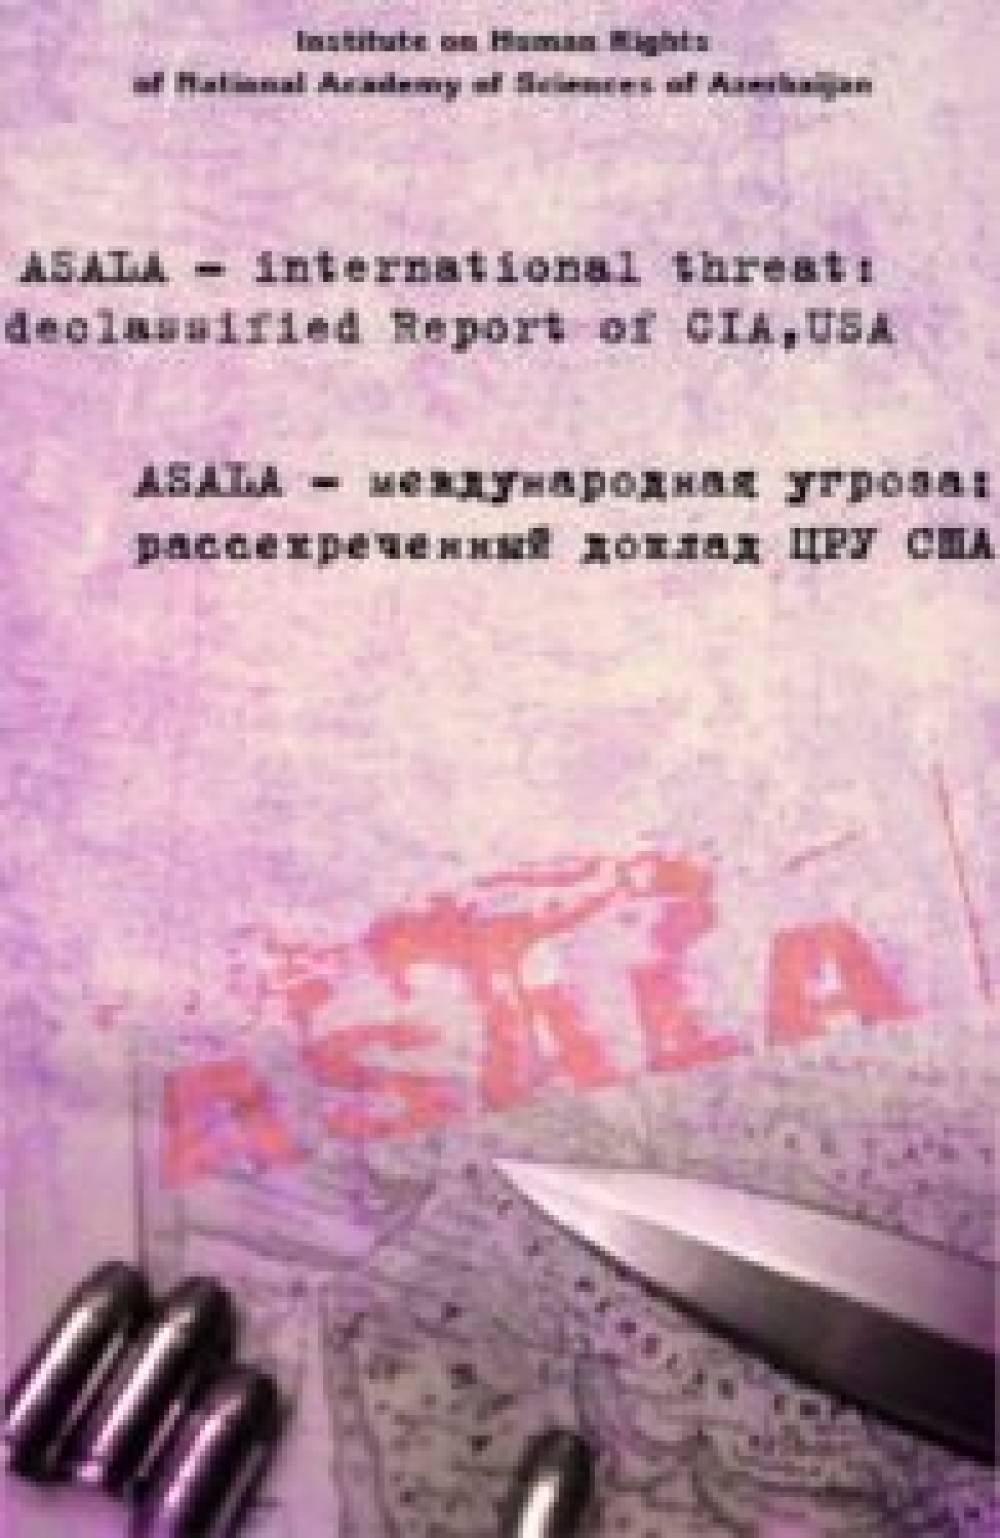 ASALA - international threat: declassified Report of CIA, USA (ASALA - международная угроза: рассекреченный доклад ЦРУ США)